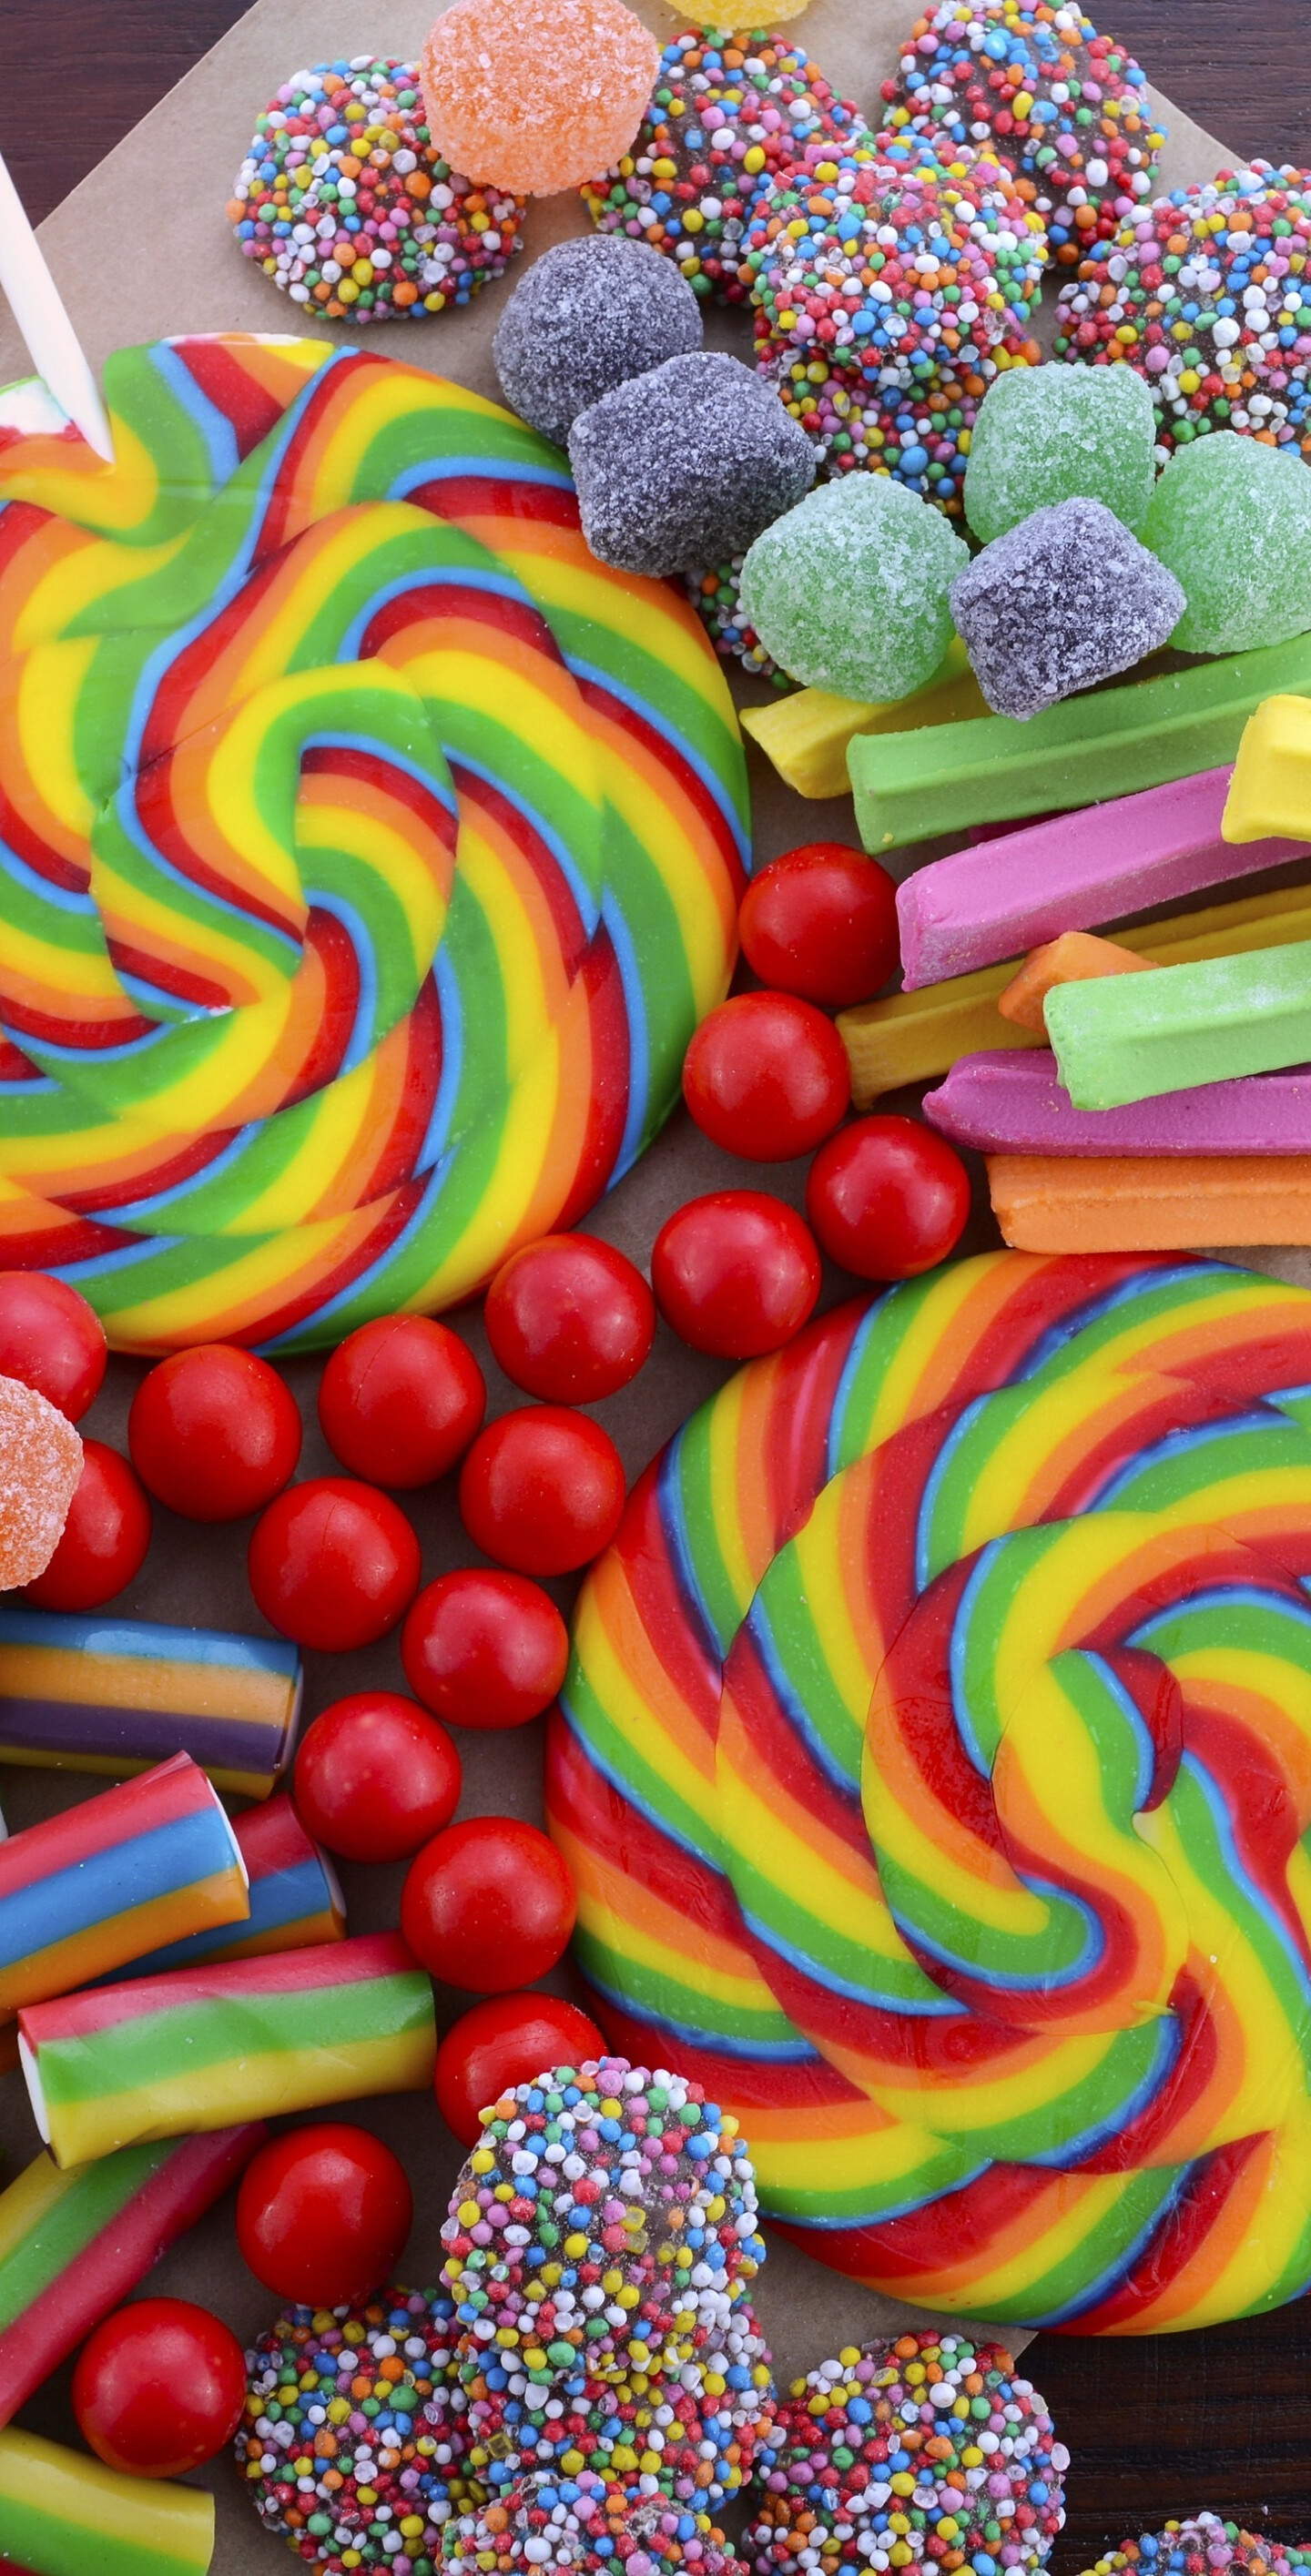 Sweets: Lollipop, Gumdrops coated in granulated sugar, Nonpareils. 1440x2830 HD Wallpaper.